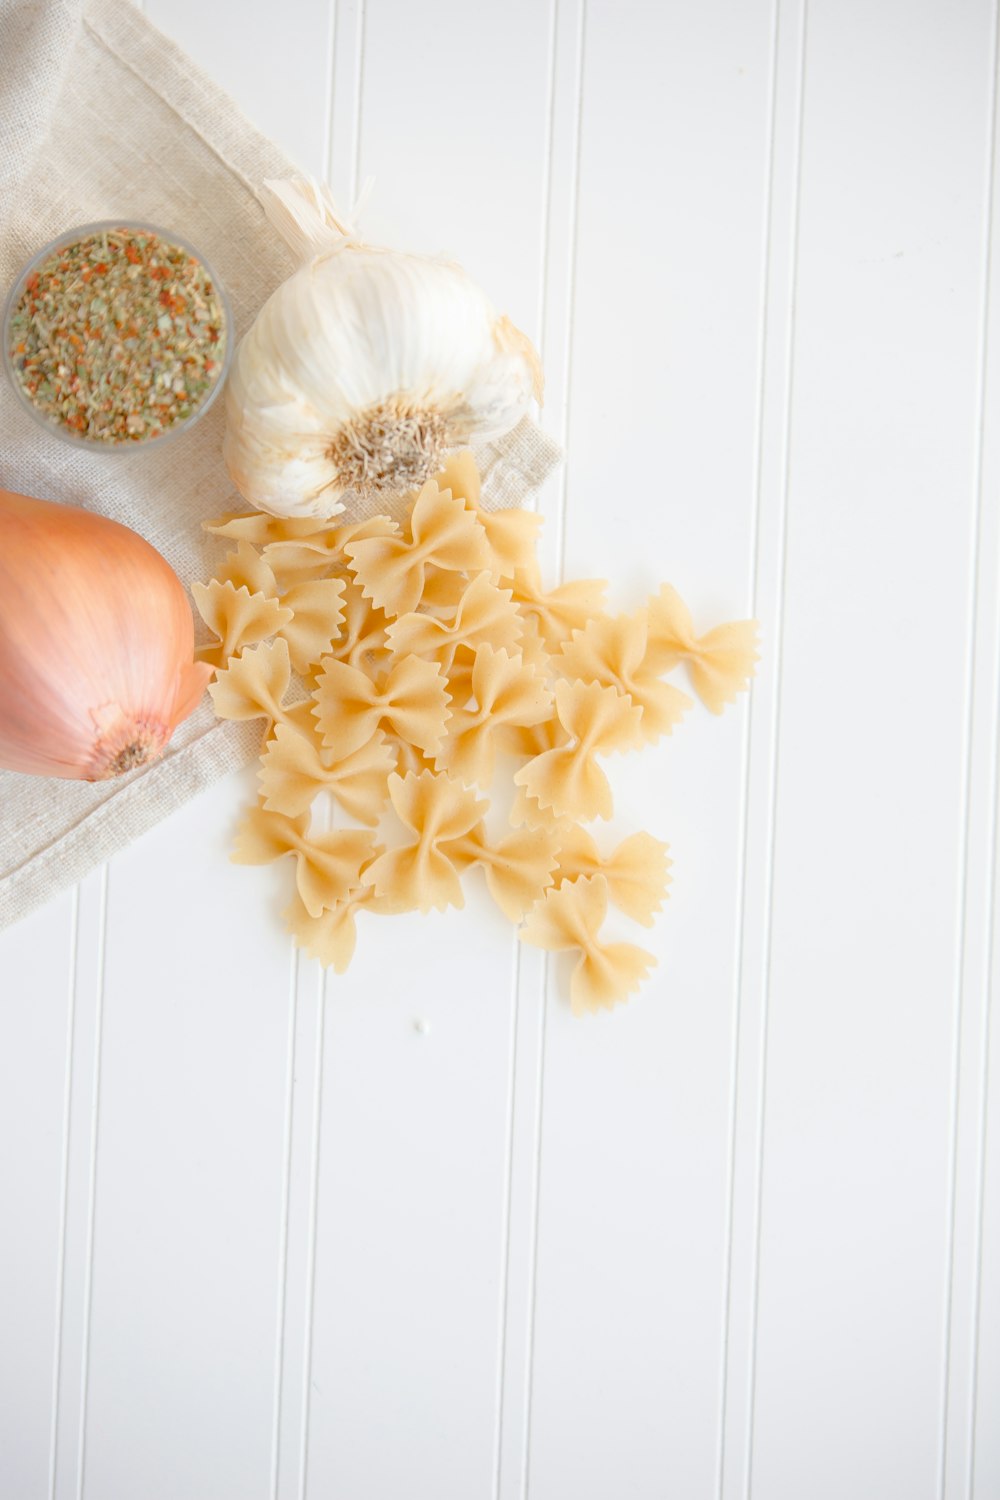 ribbon pasta beside garlic and onion